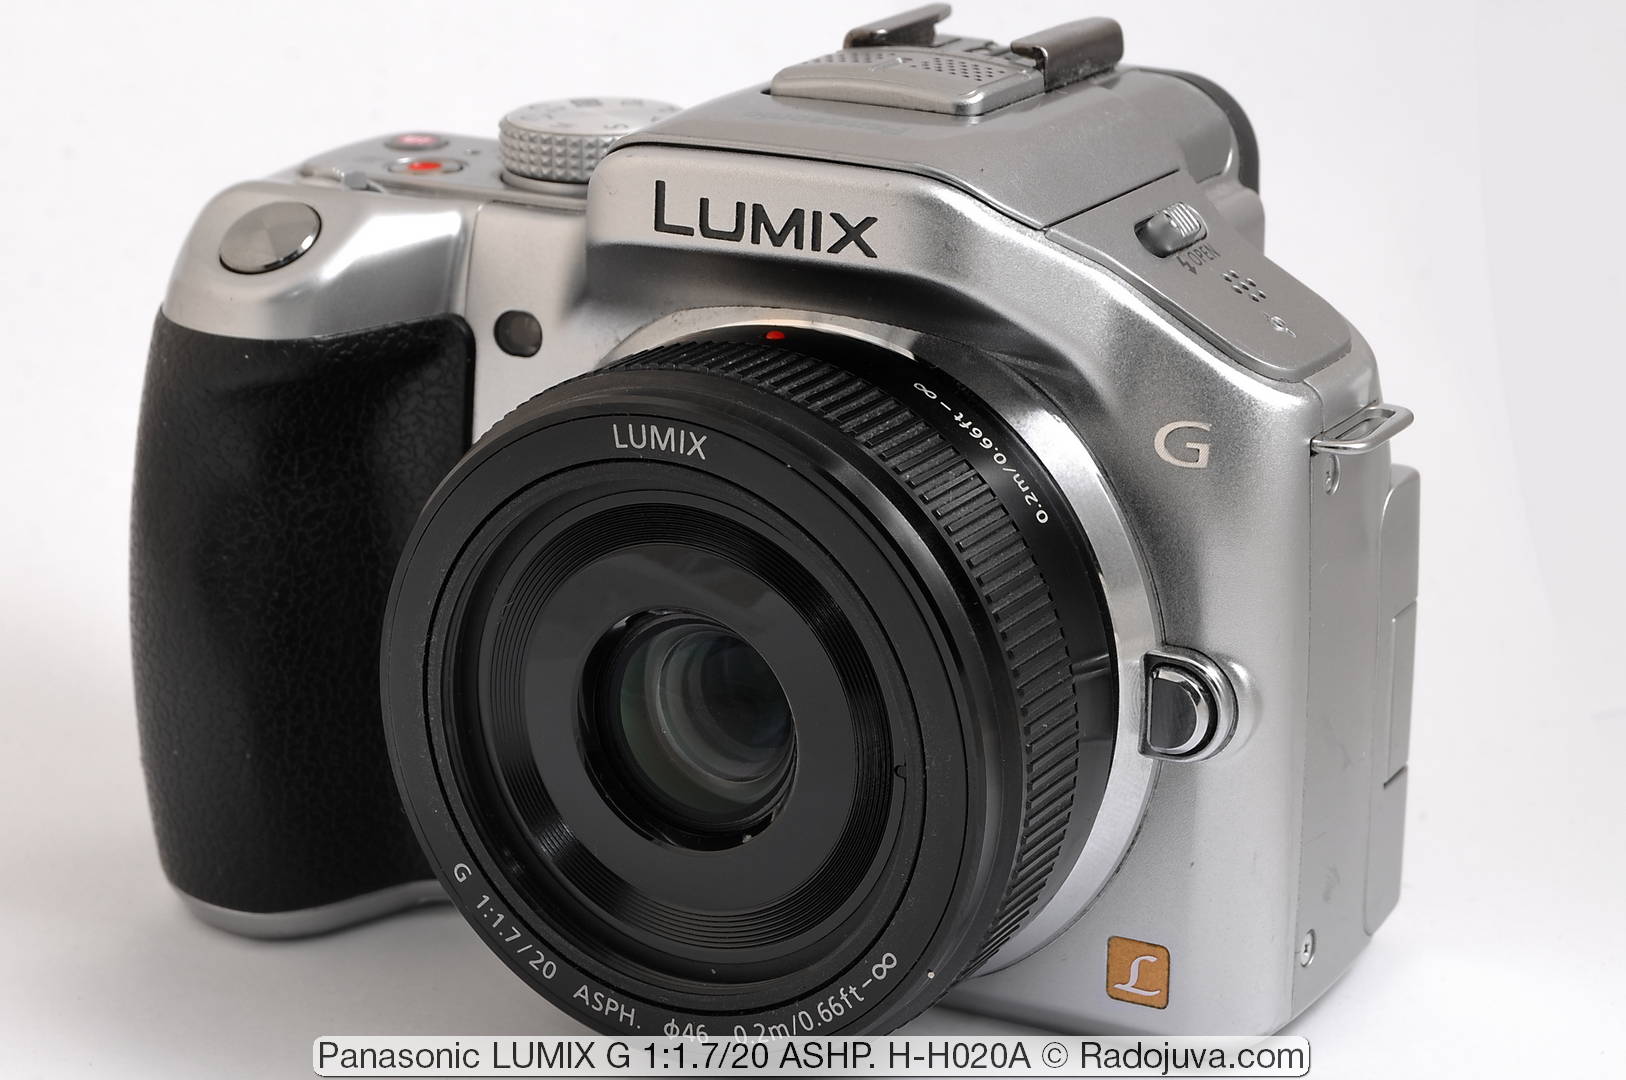 Panasonic 20mm f/1.7 ASPH LUMIX GII